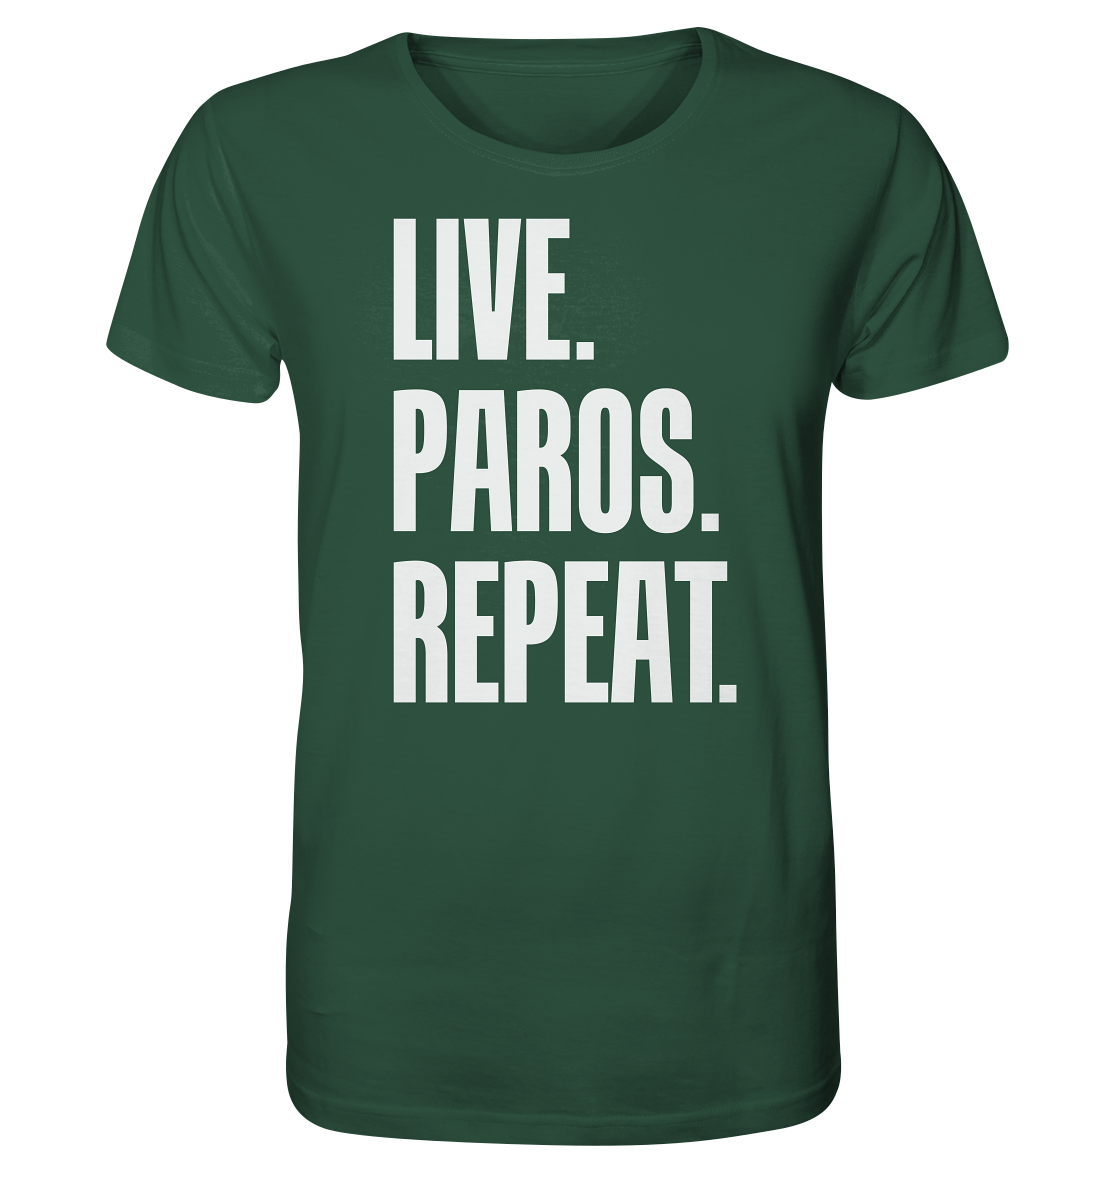 LIVE. PAROS. REPEAT. -Organic shirt